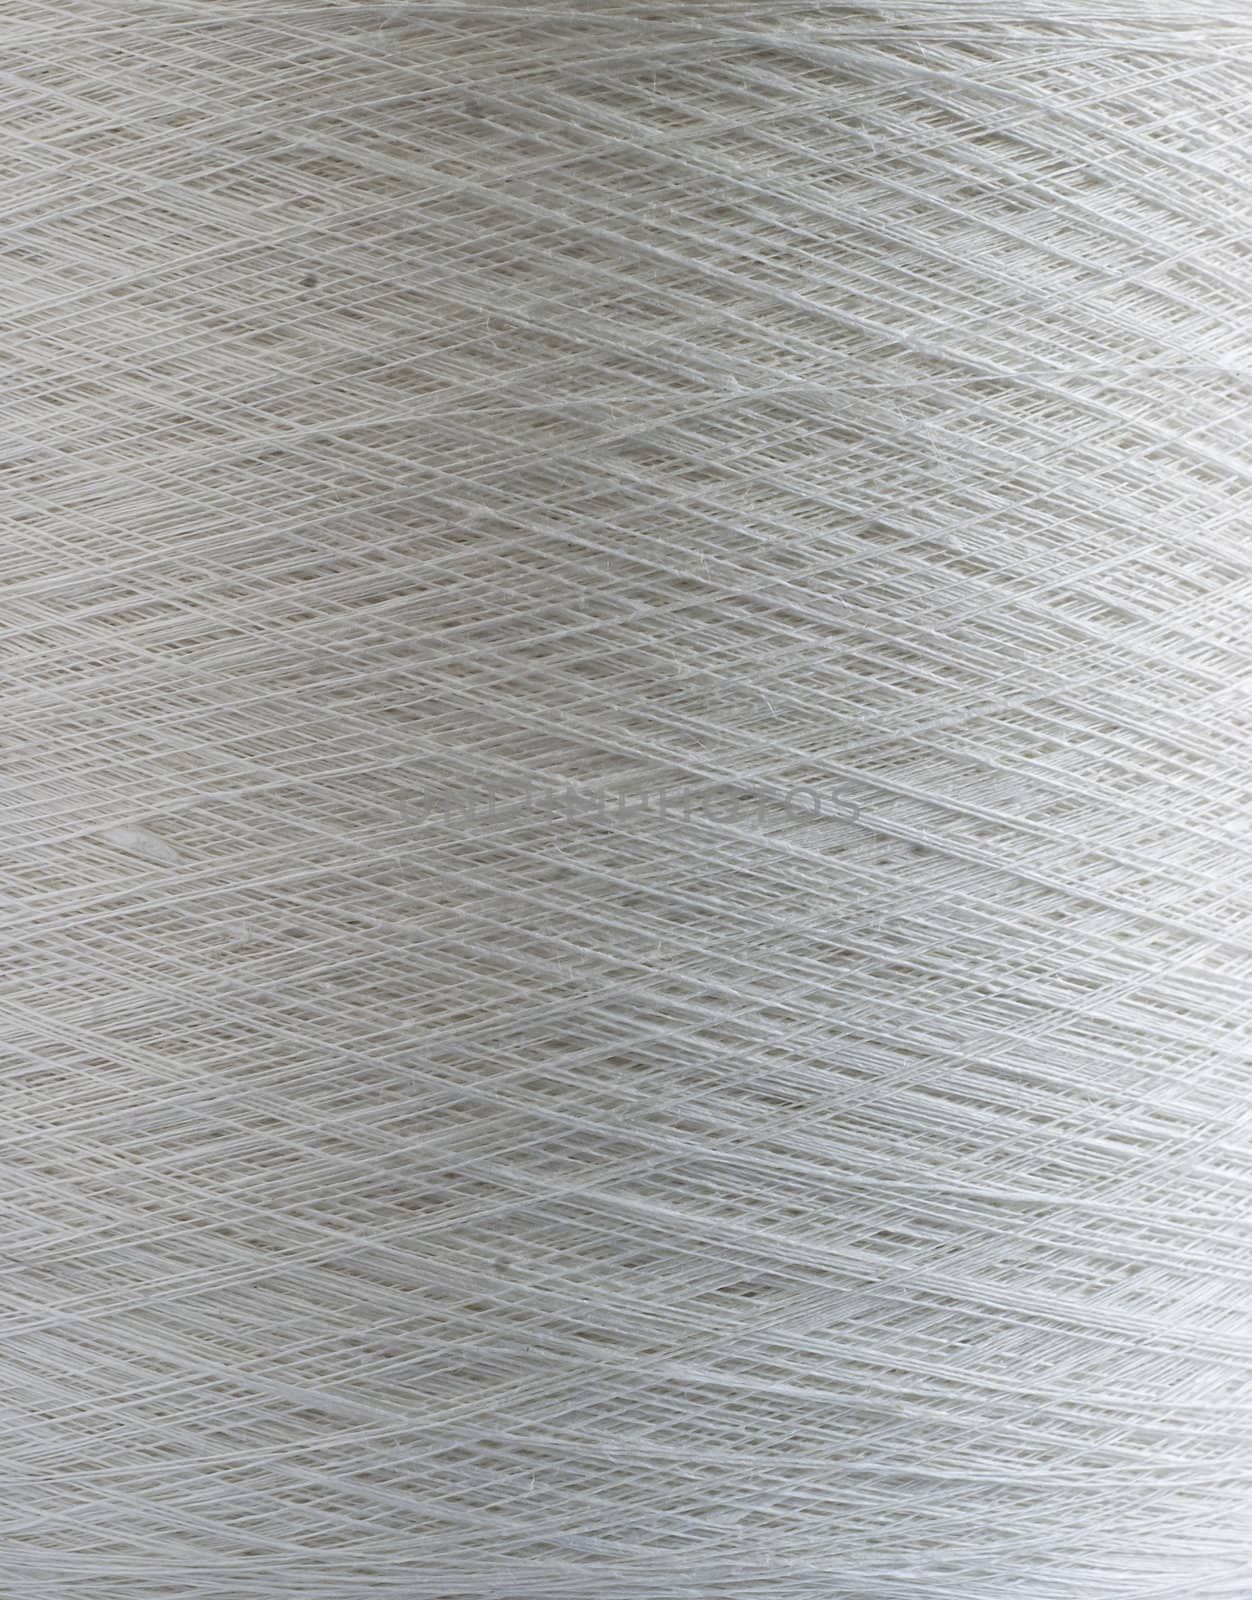 White linen yarn bobbin closeup detail as background